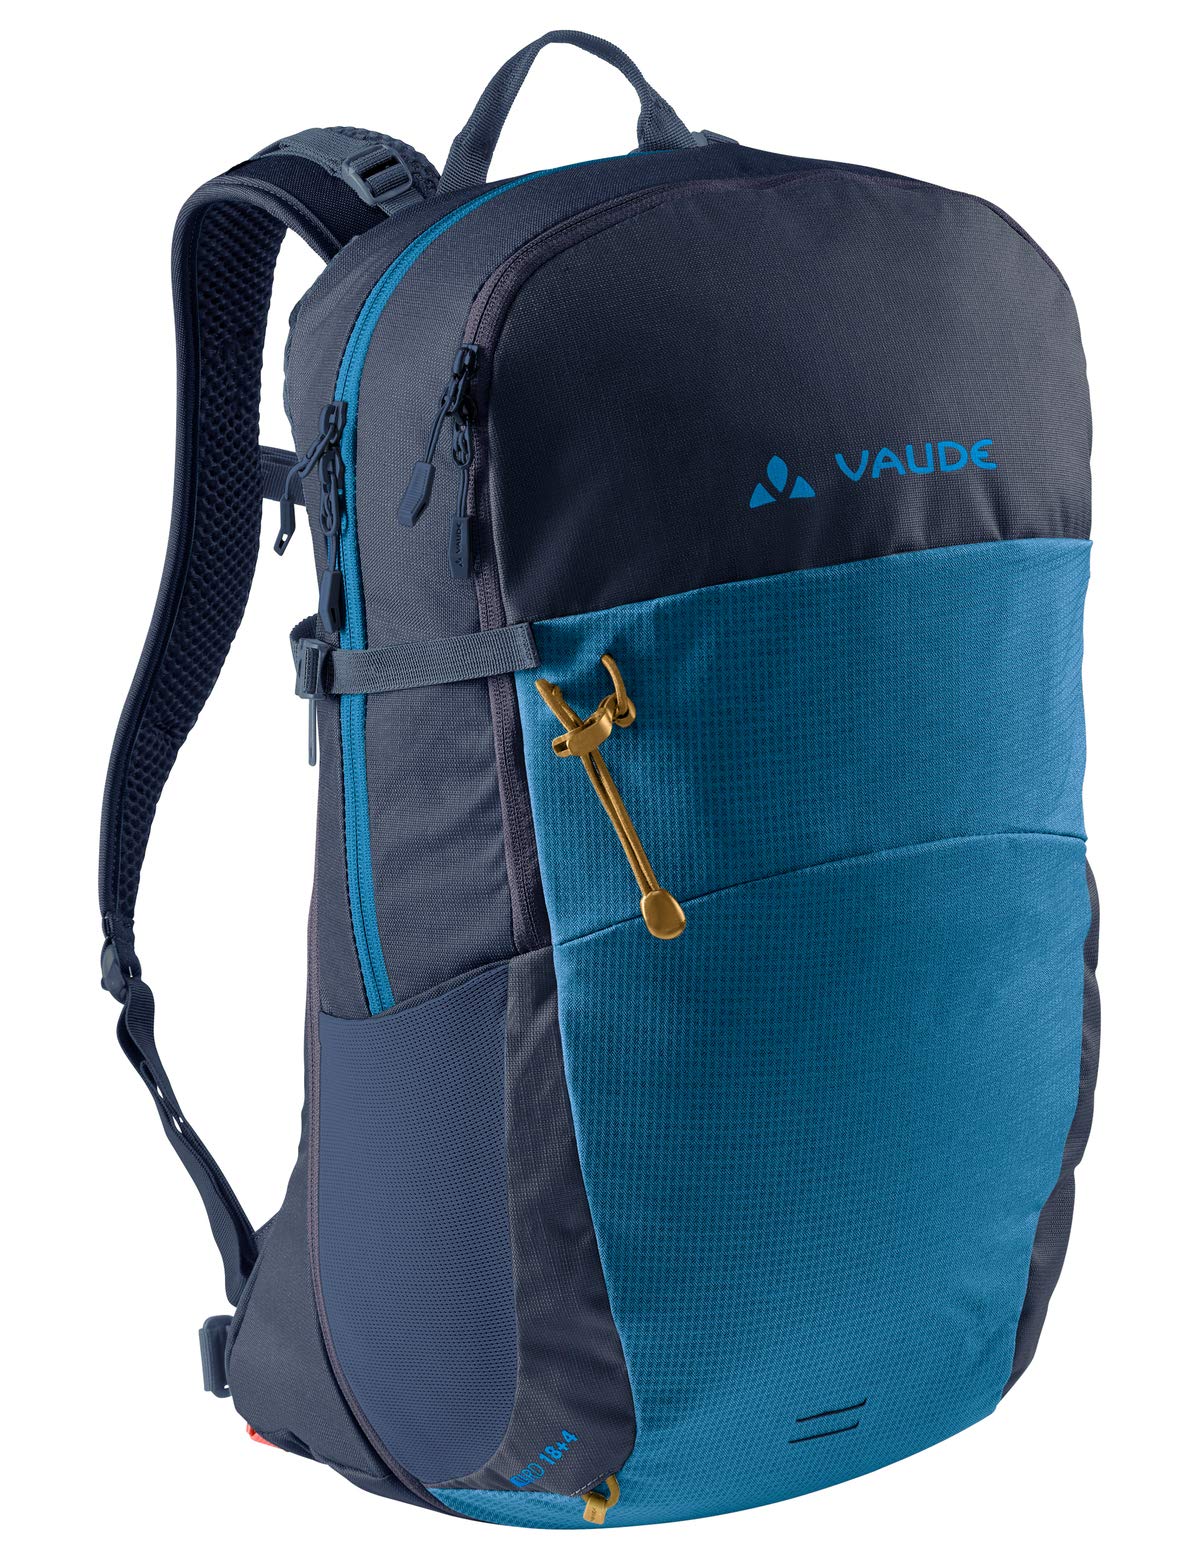 VAUDE Rucksack Backpacks, 18 L, Kingfisher